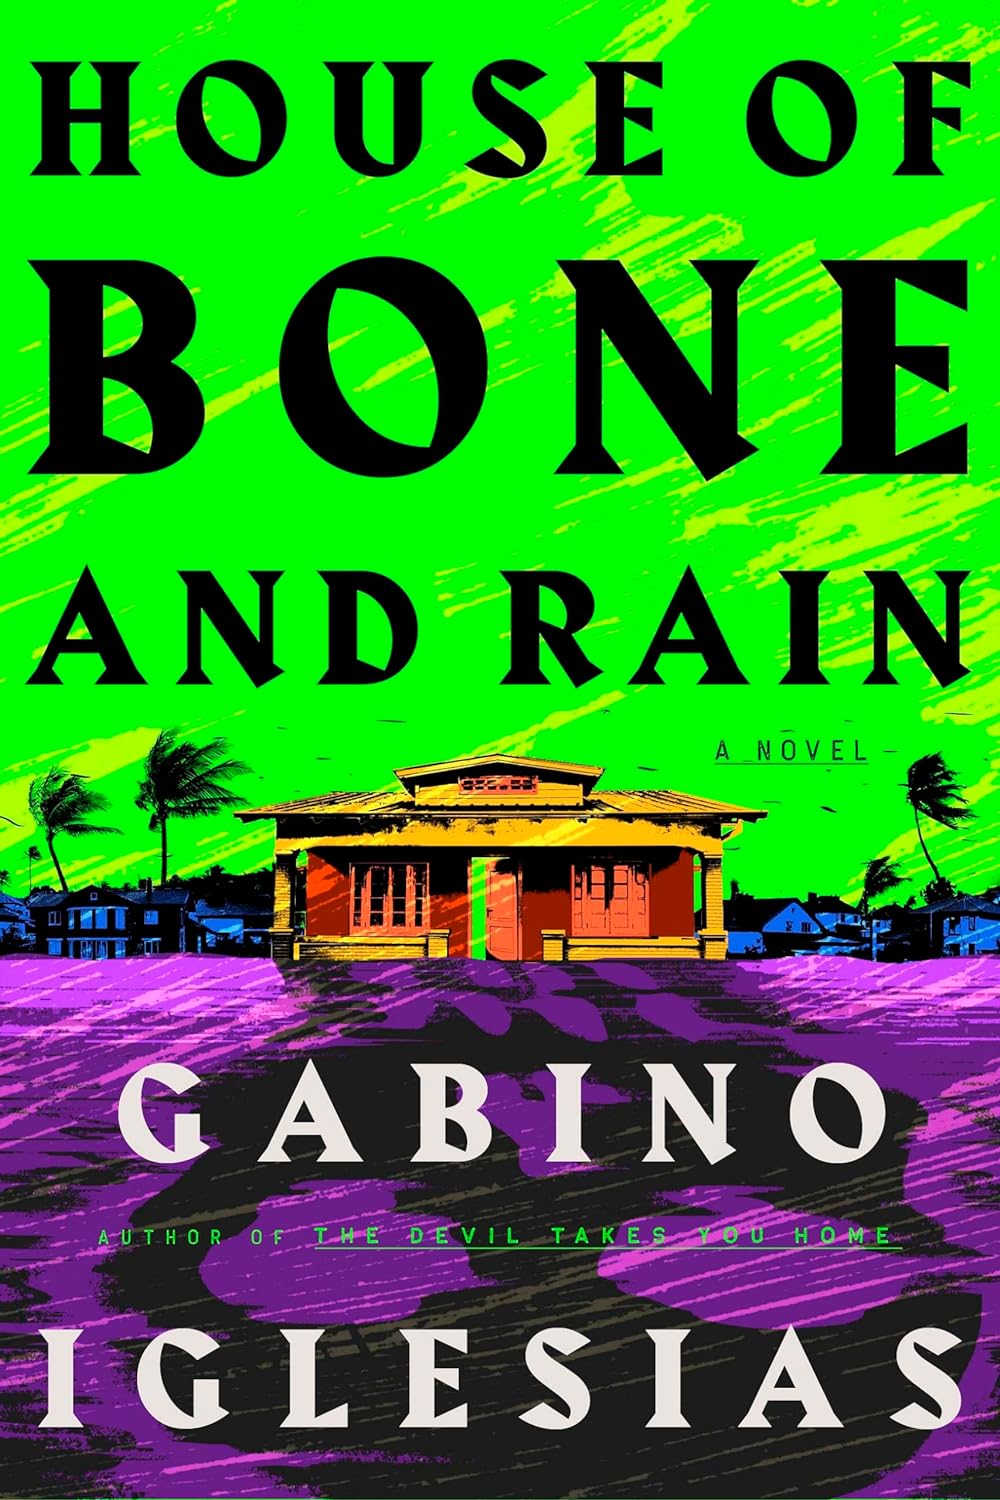 House of Bone and Rain by Gabino Iglesias